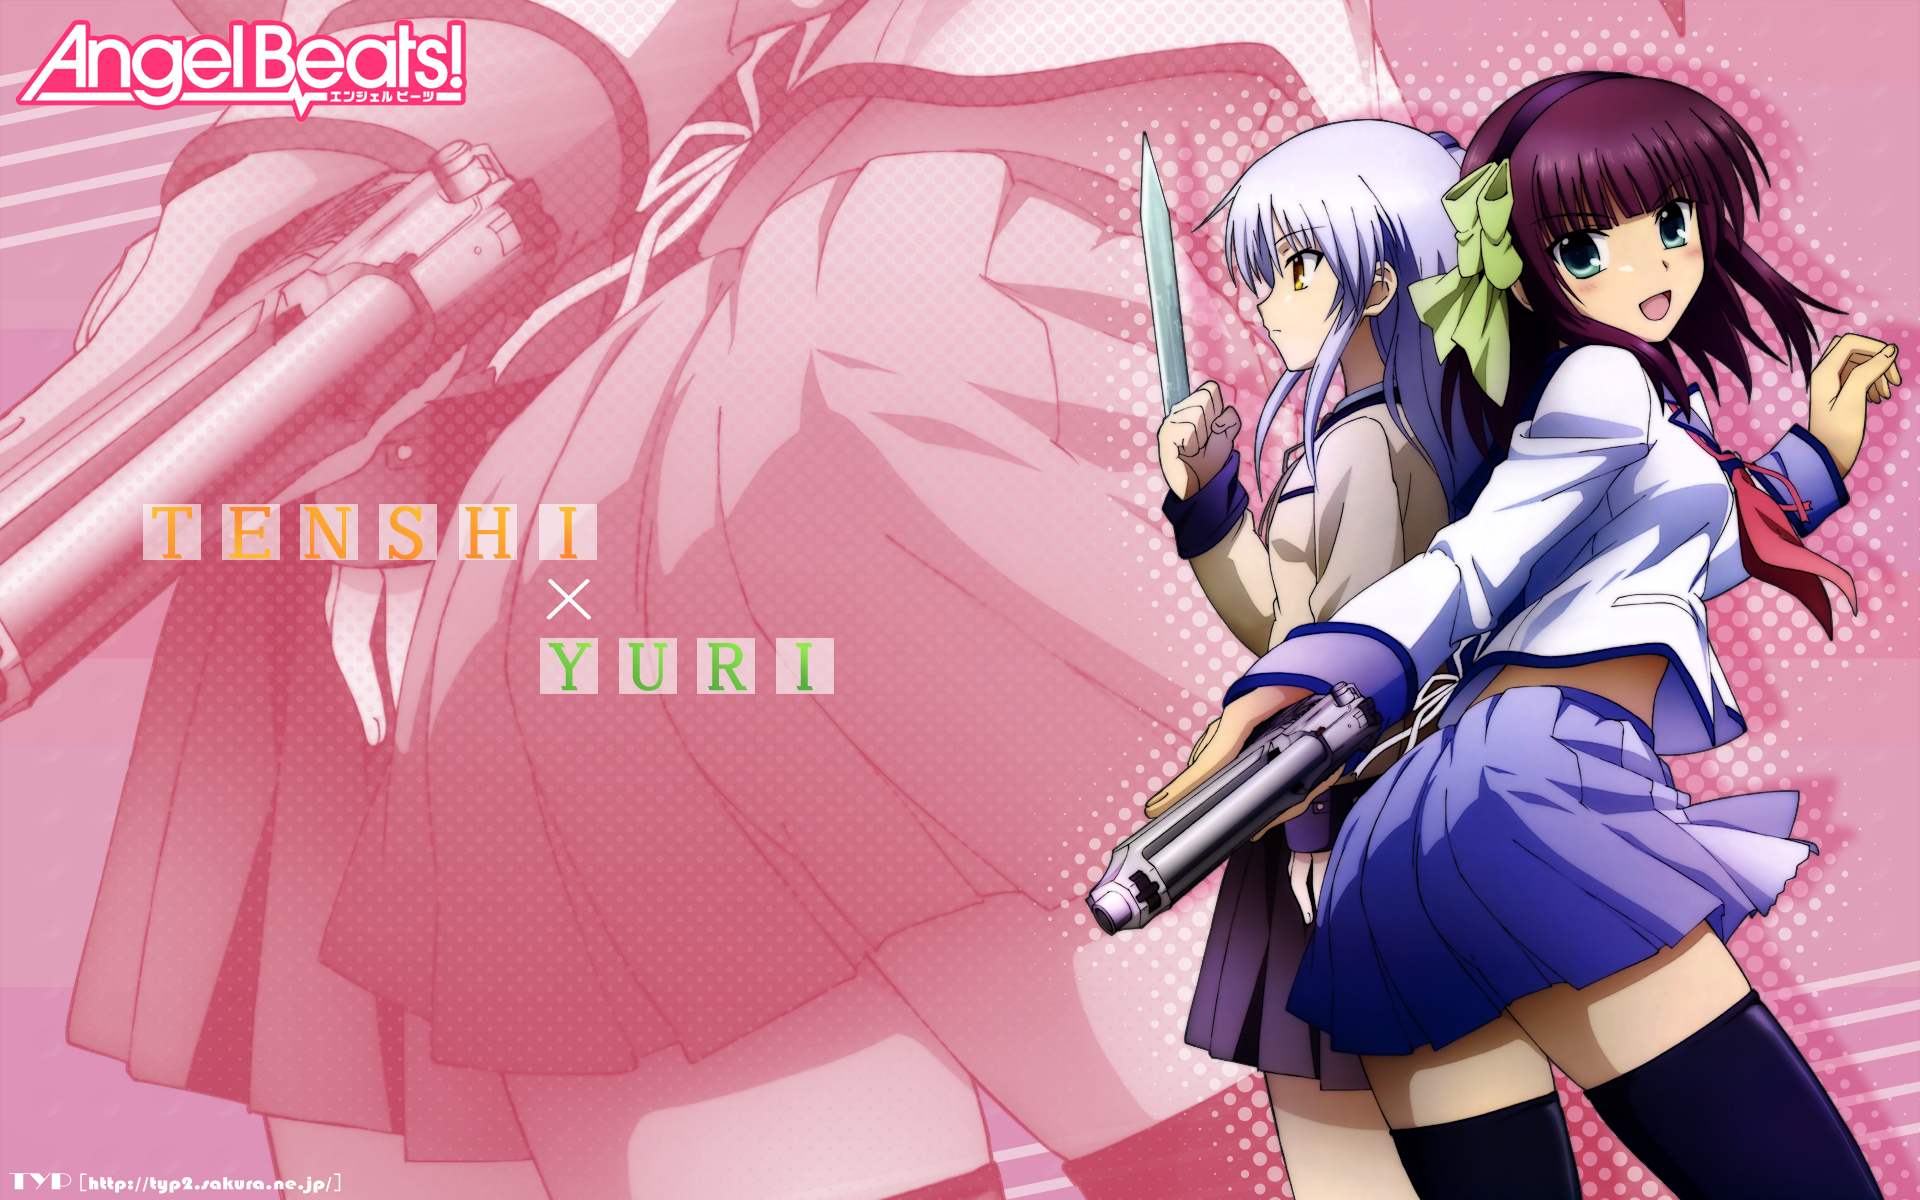 The Angel Beats Anime Wallpaper Titled Kanade And Yuri